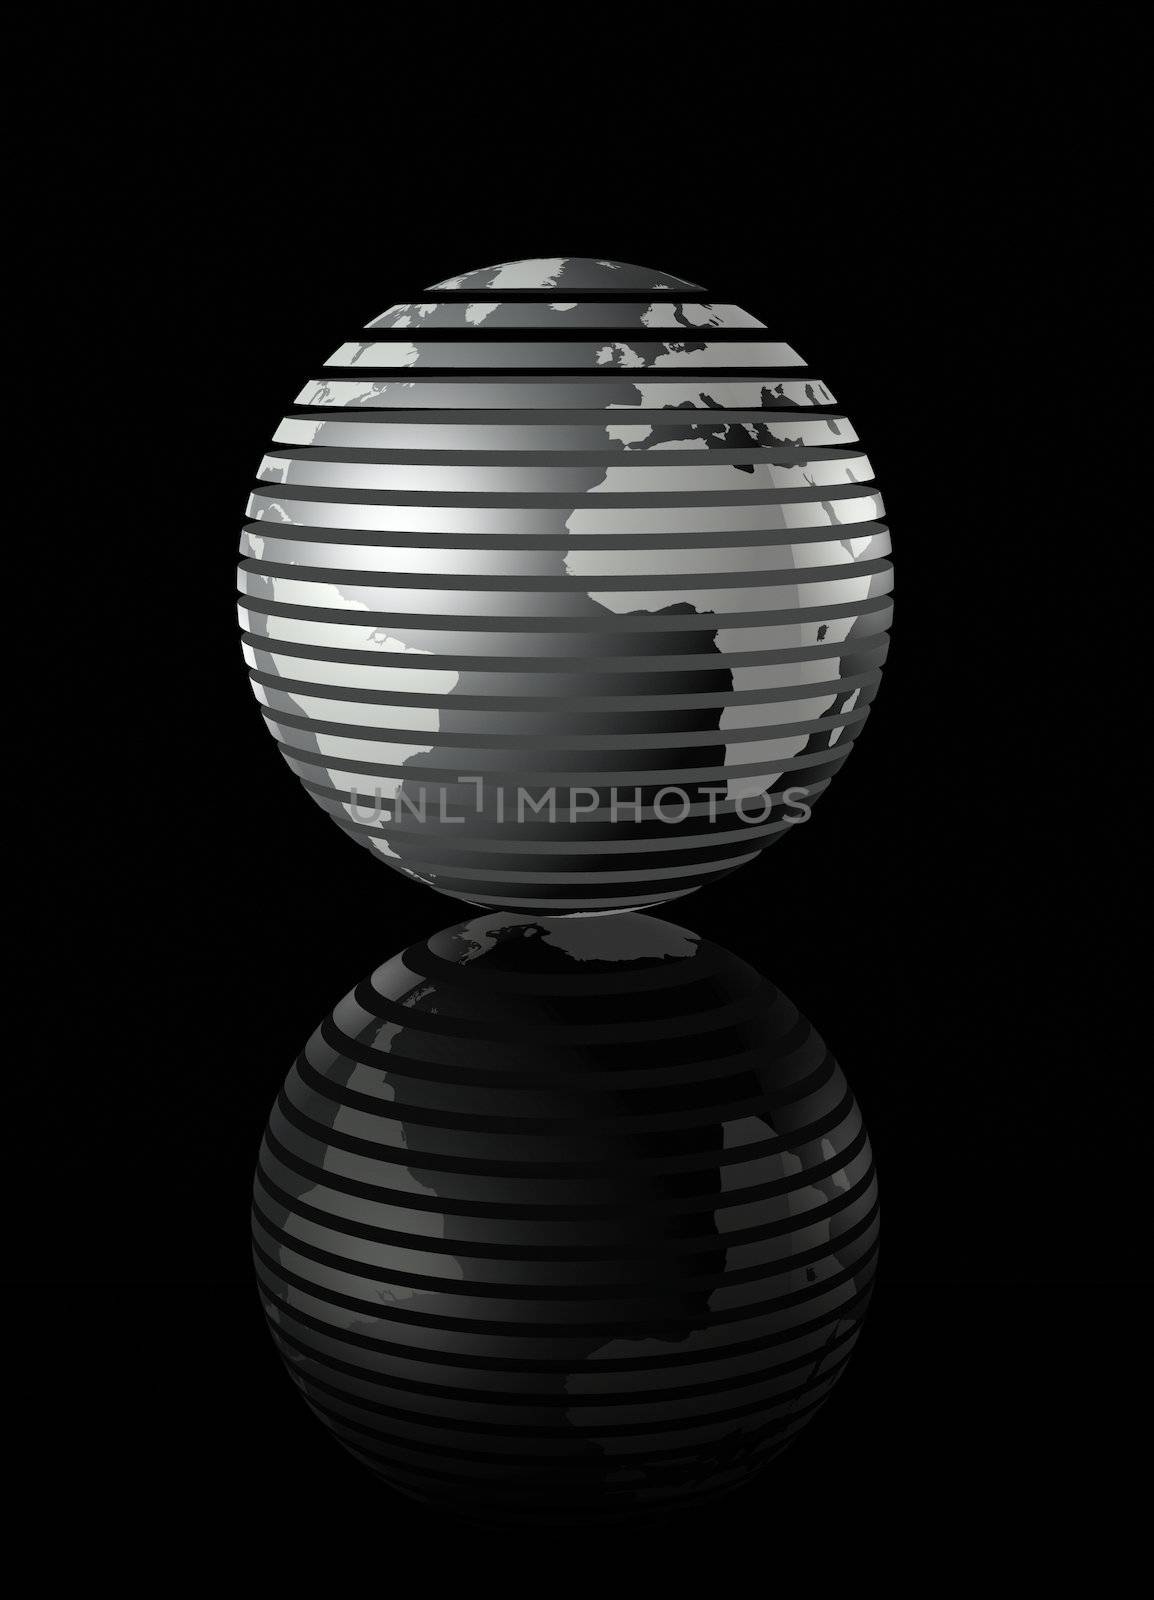 silver glossy globe on black background by daboost